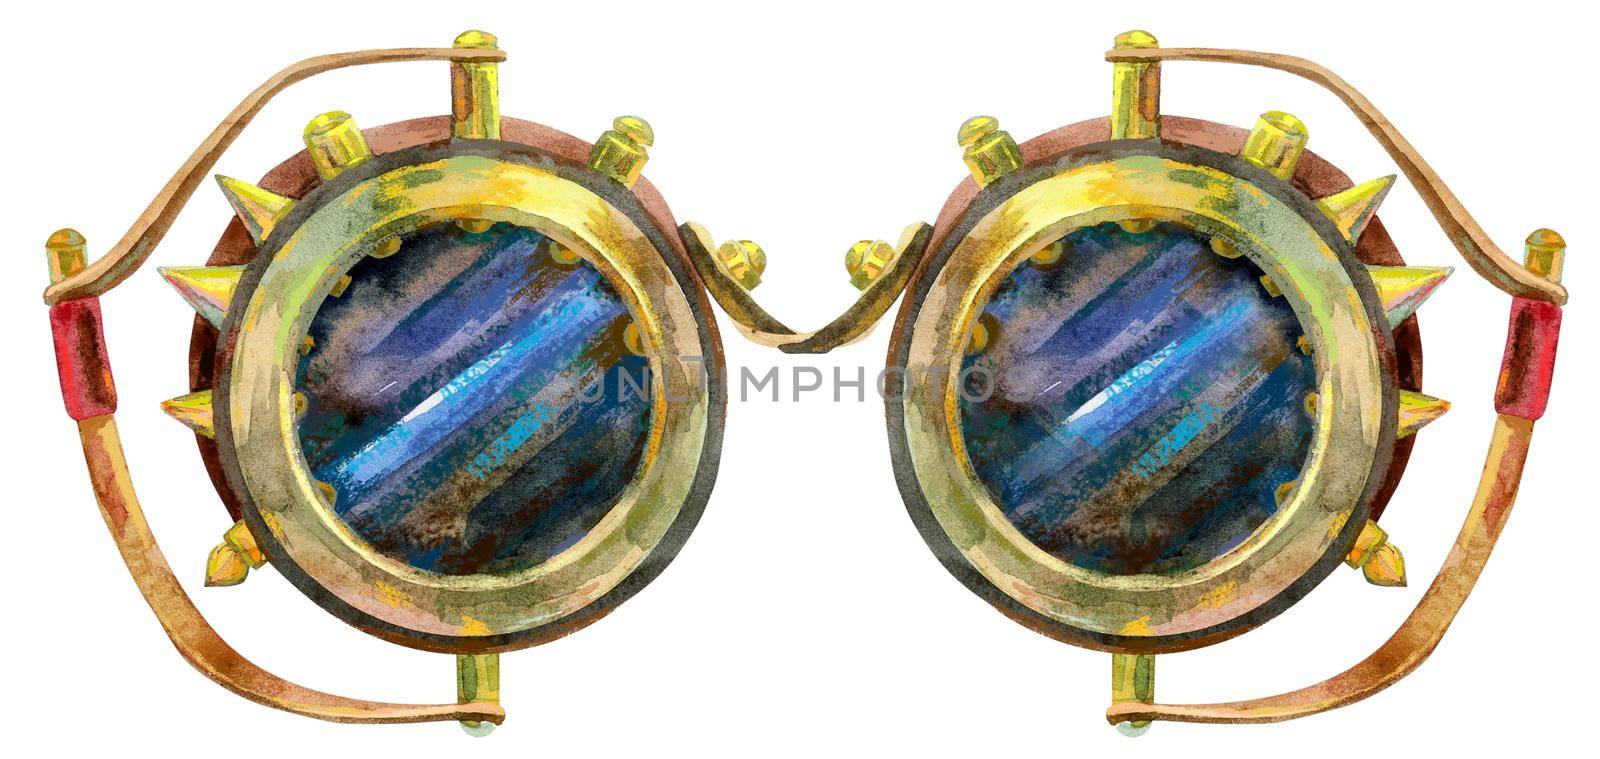 Watercolor steampunk Goggles trendy designs for modern fashion